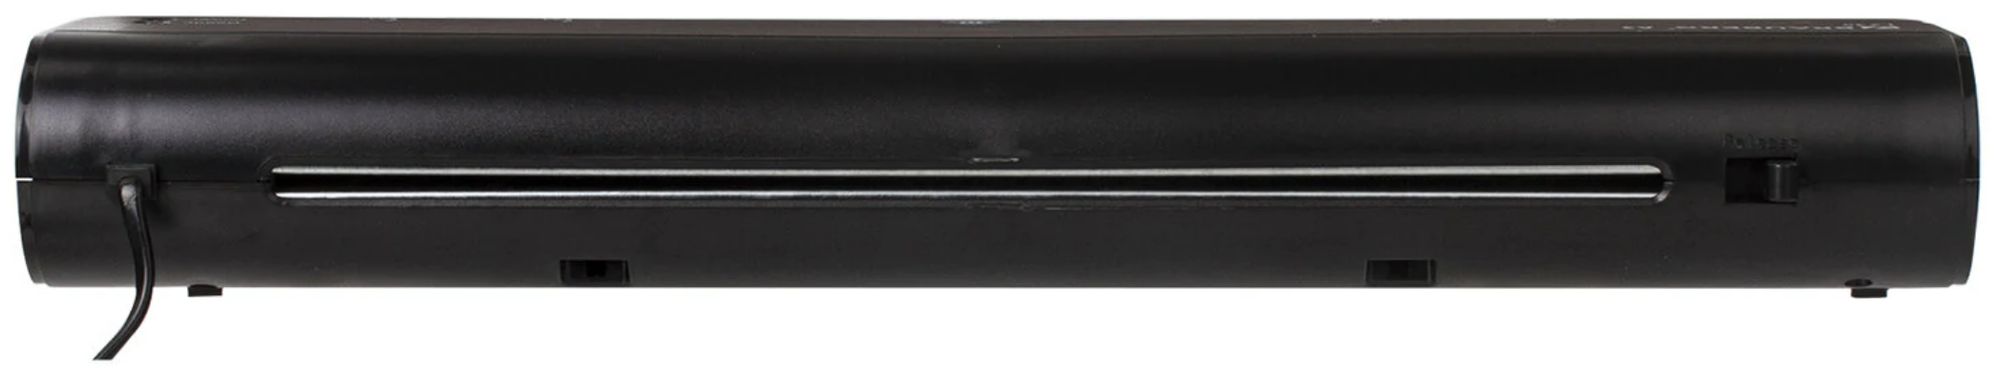 Ламинатор BRAUBERG NANO L235, формат А3, толщина пленки 1 сторона 75-125 мкм, скорость 35 см/мин, 531811